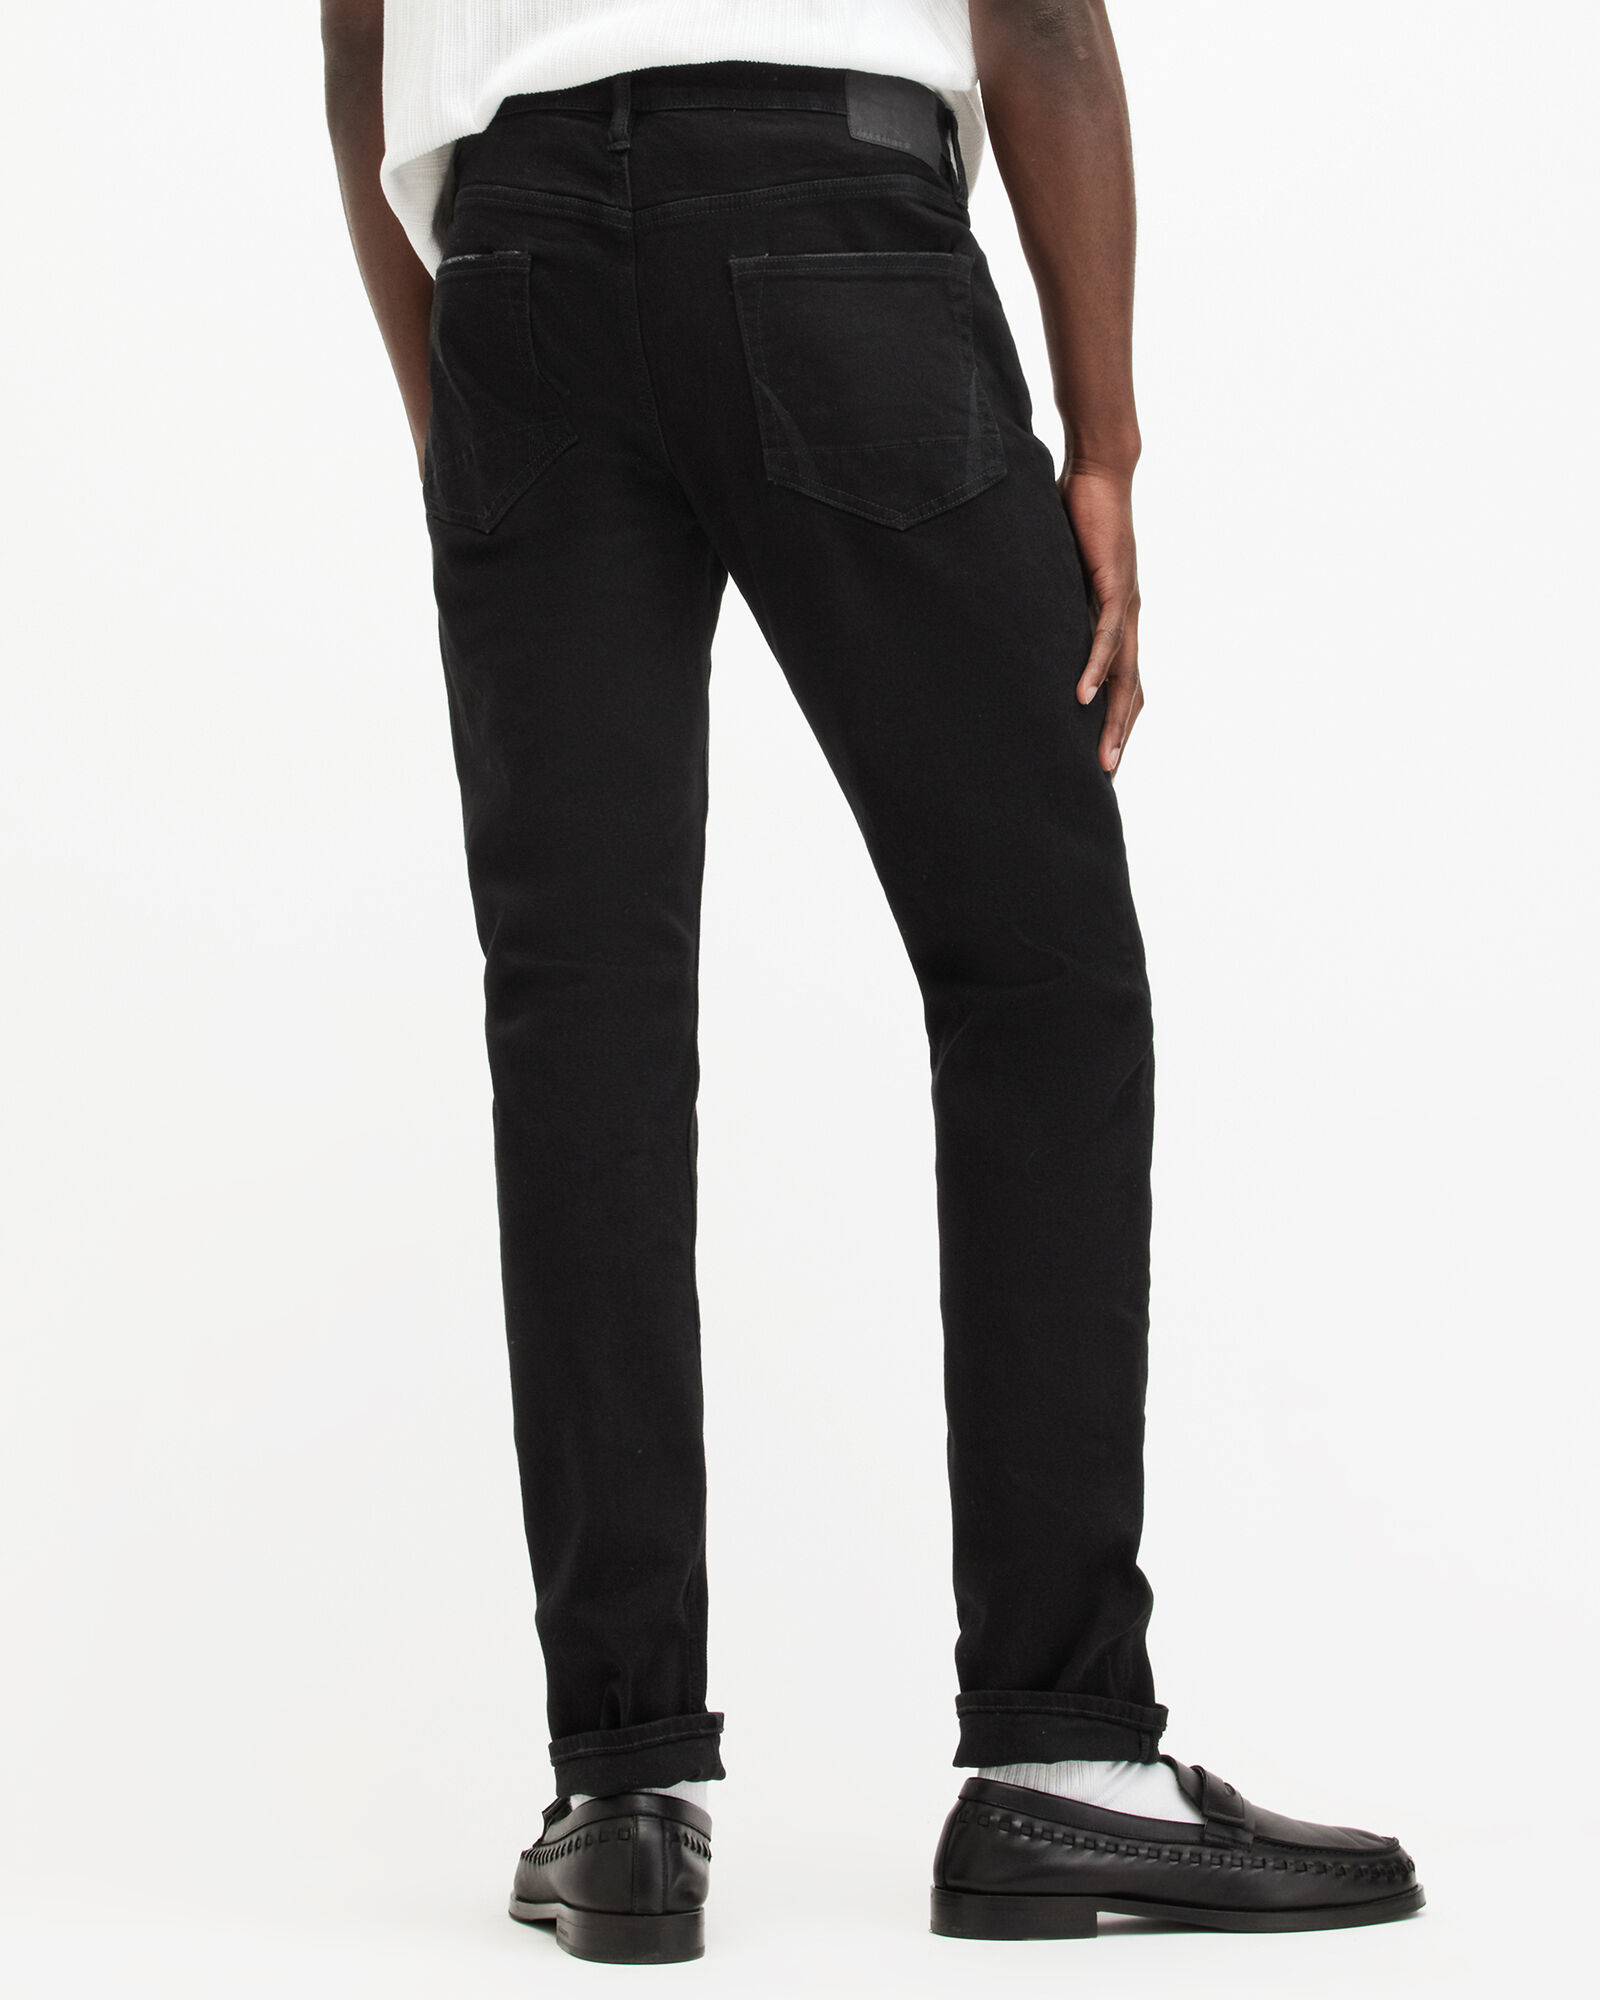 H&M Skinny Jeans Mens 32 Black Denim Extra Slim Fit Stretch Pants 32x32  Modern | eBay